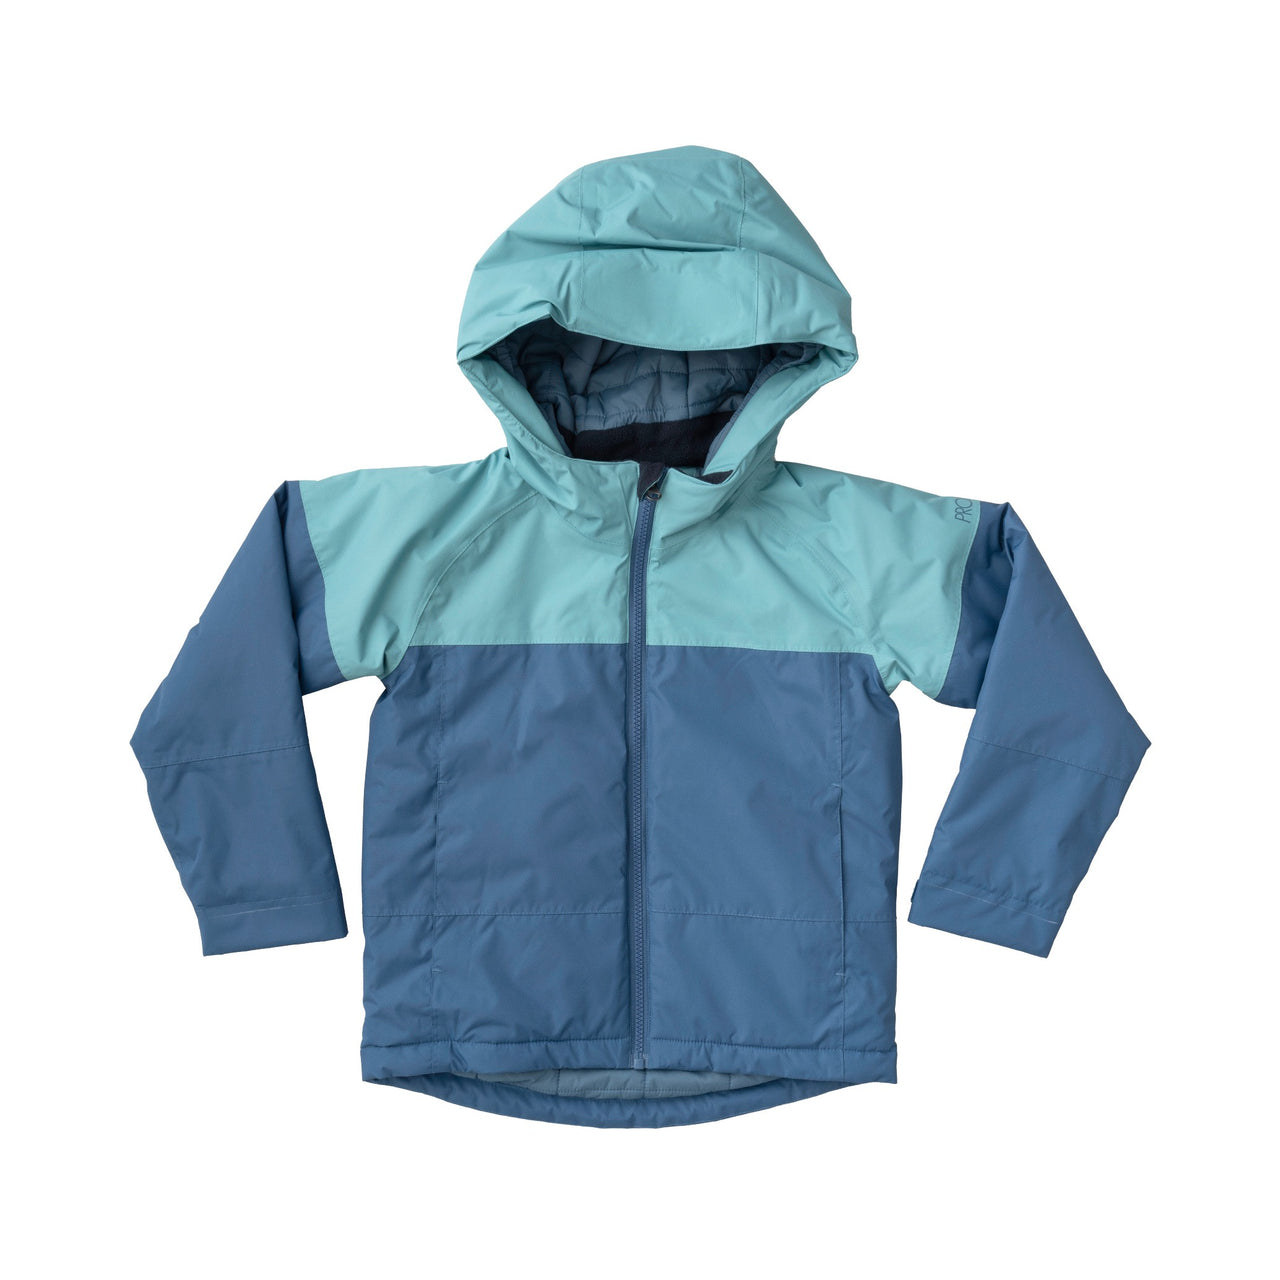 Prodoh Nile Blue and Moonlight Blue Colorblock Pro Ski Jacket 5009